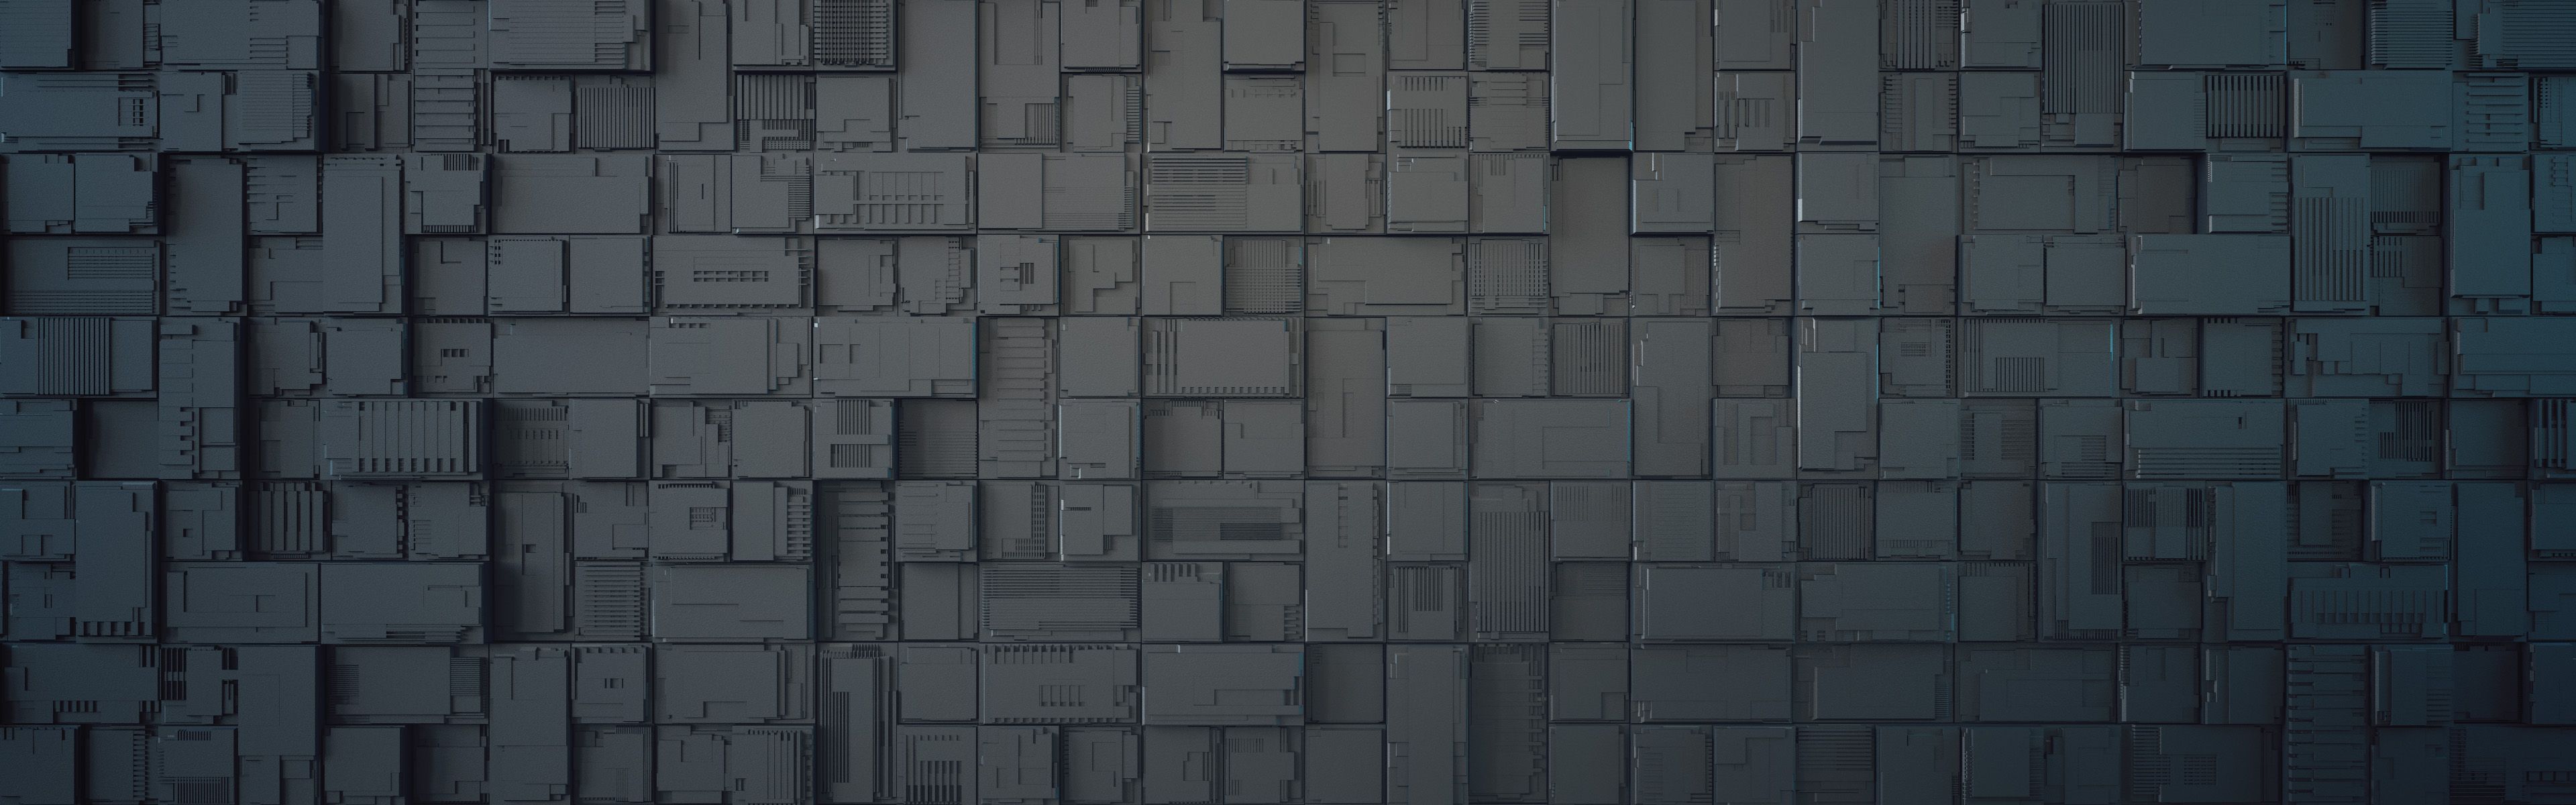 Abstract Computer Wallpapers, Desktop Backgrounds | 3840x1200 | ID ...